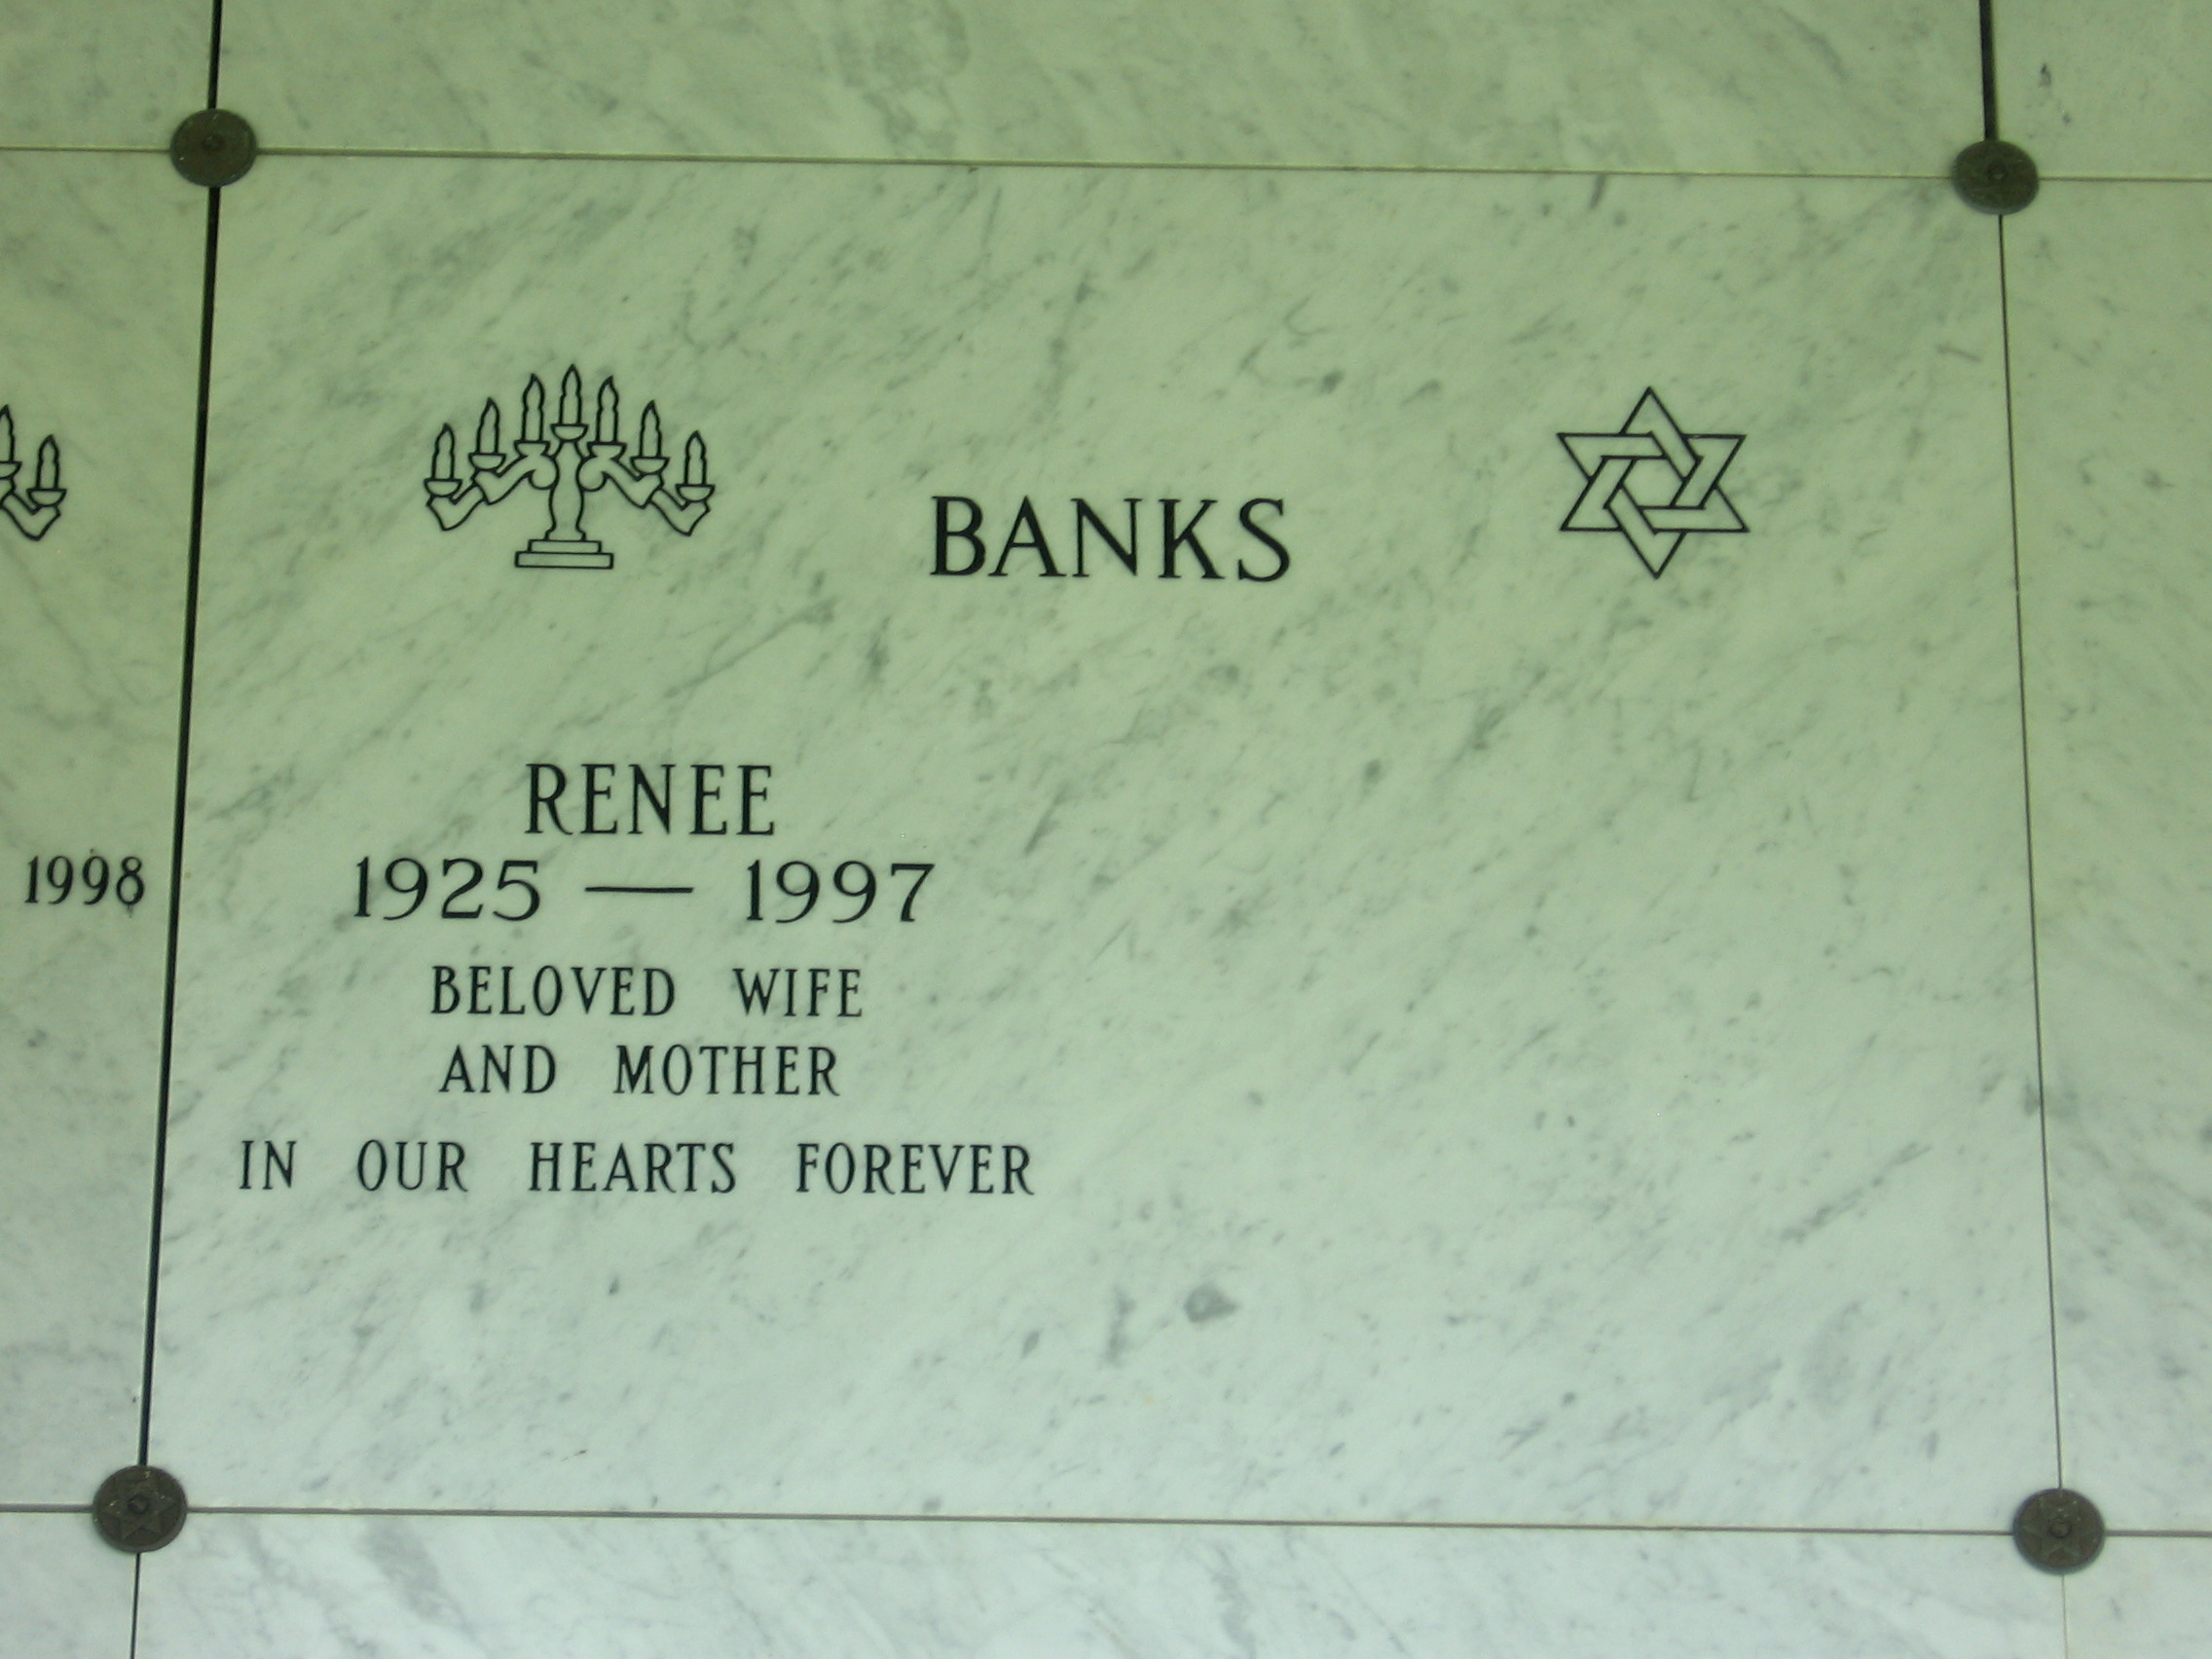 Renee Banks